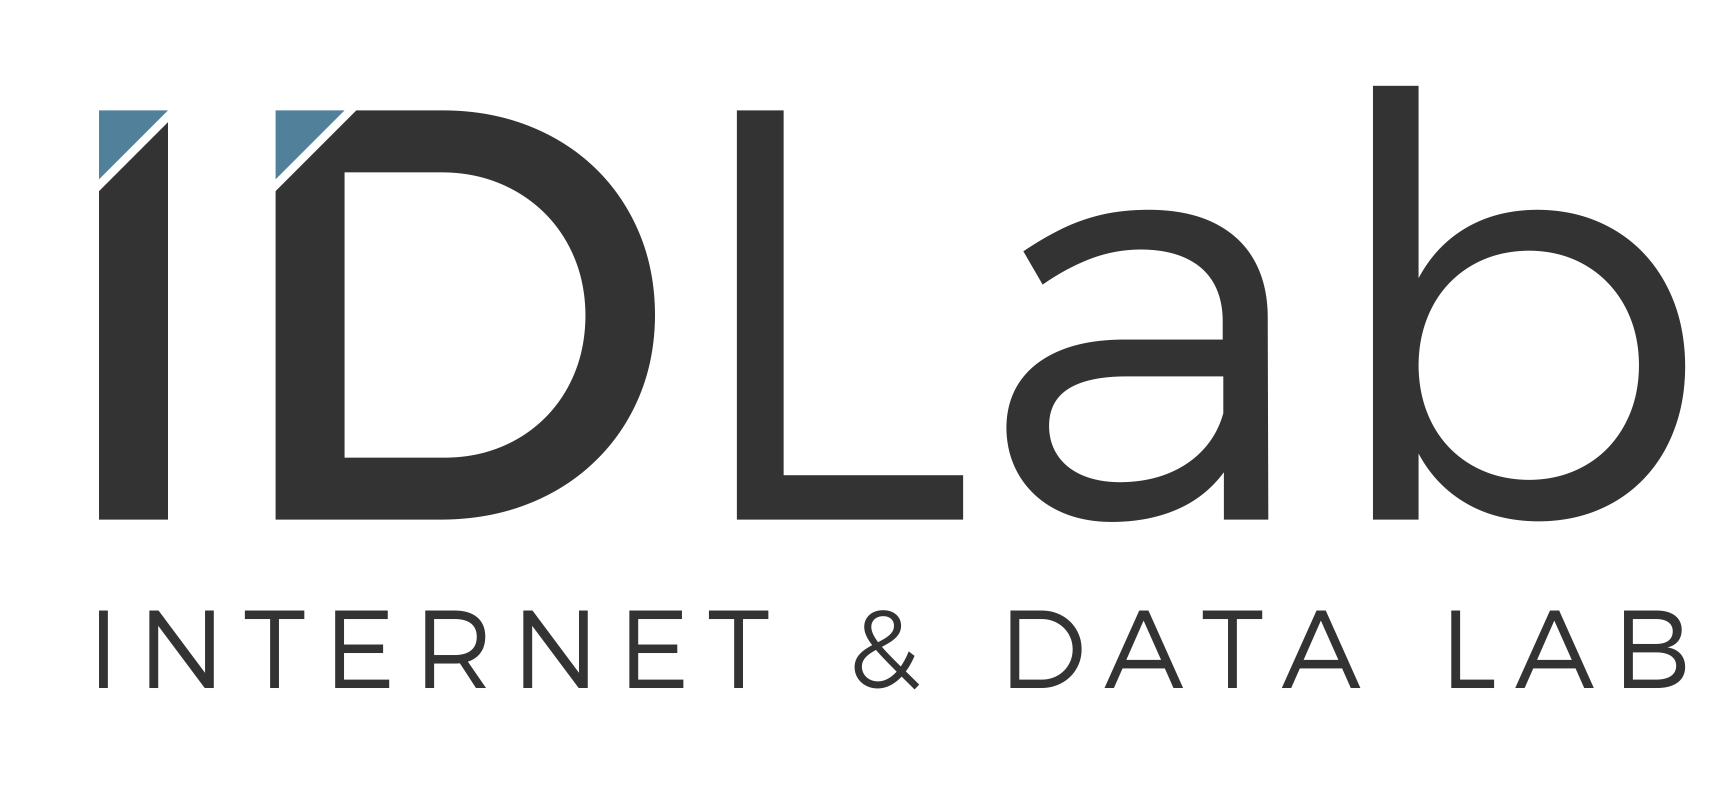 Ghent University - Internet & Data Lab (Ugent-IDLab)